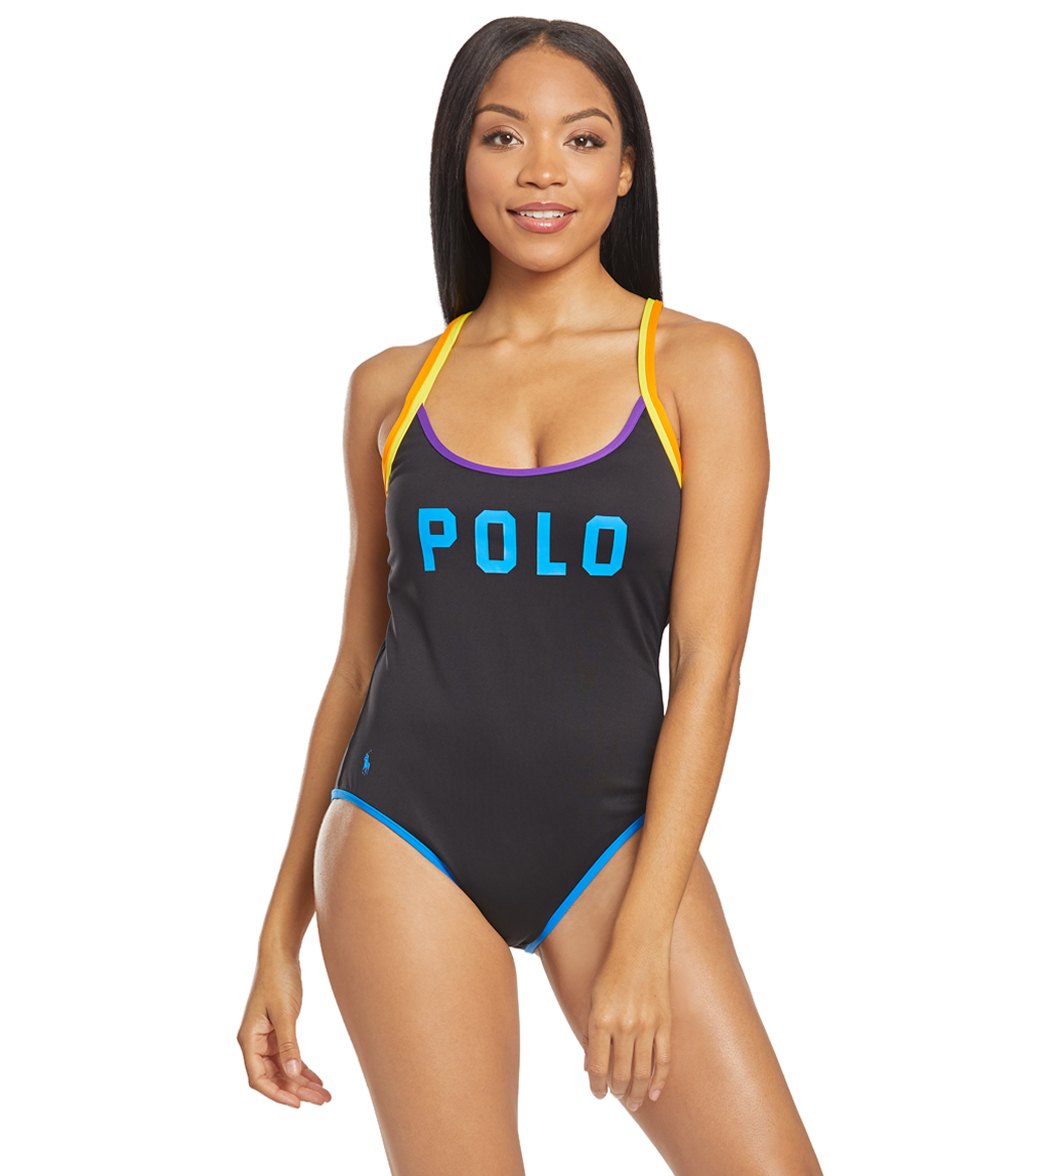 polo ralph lauren bathing suit